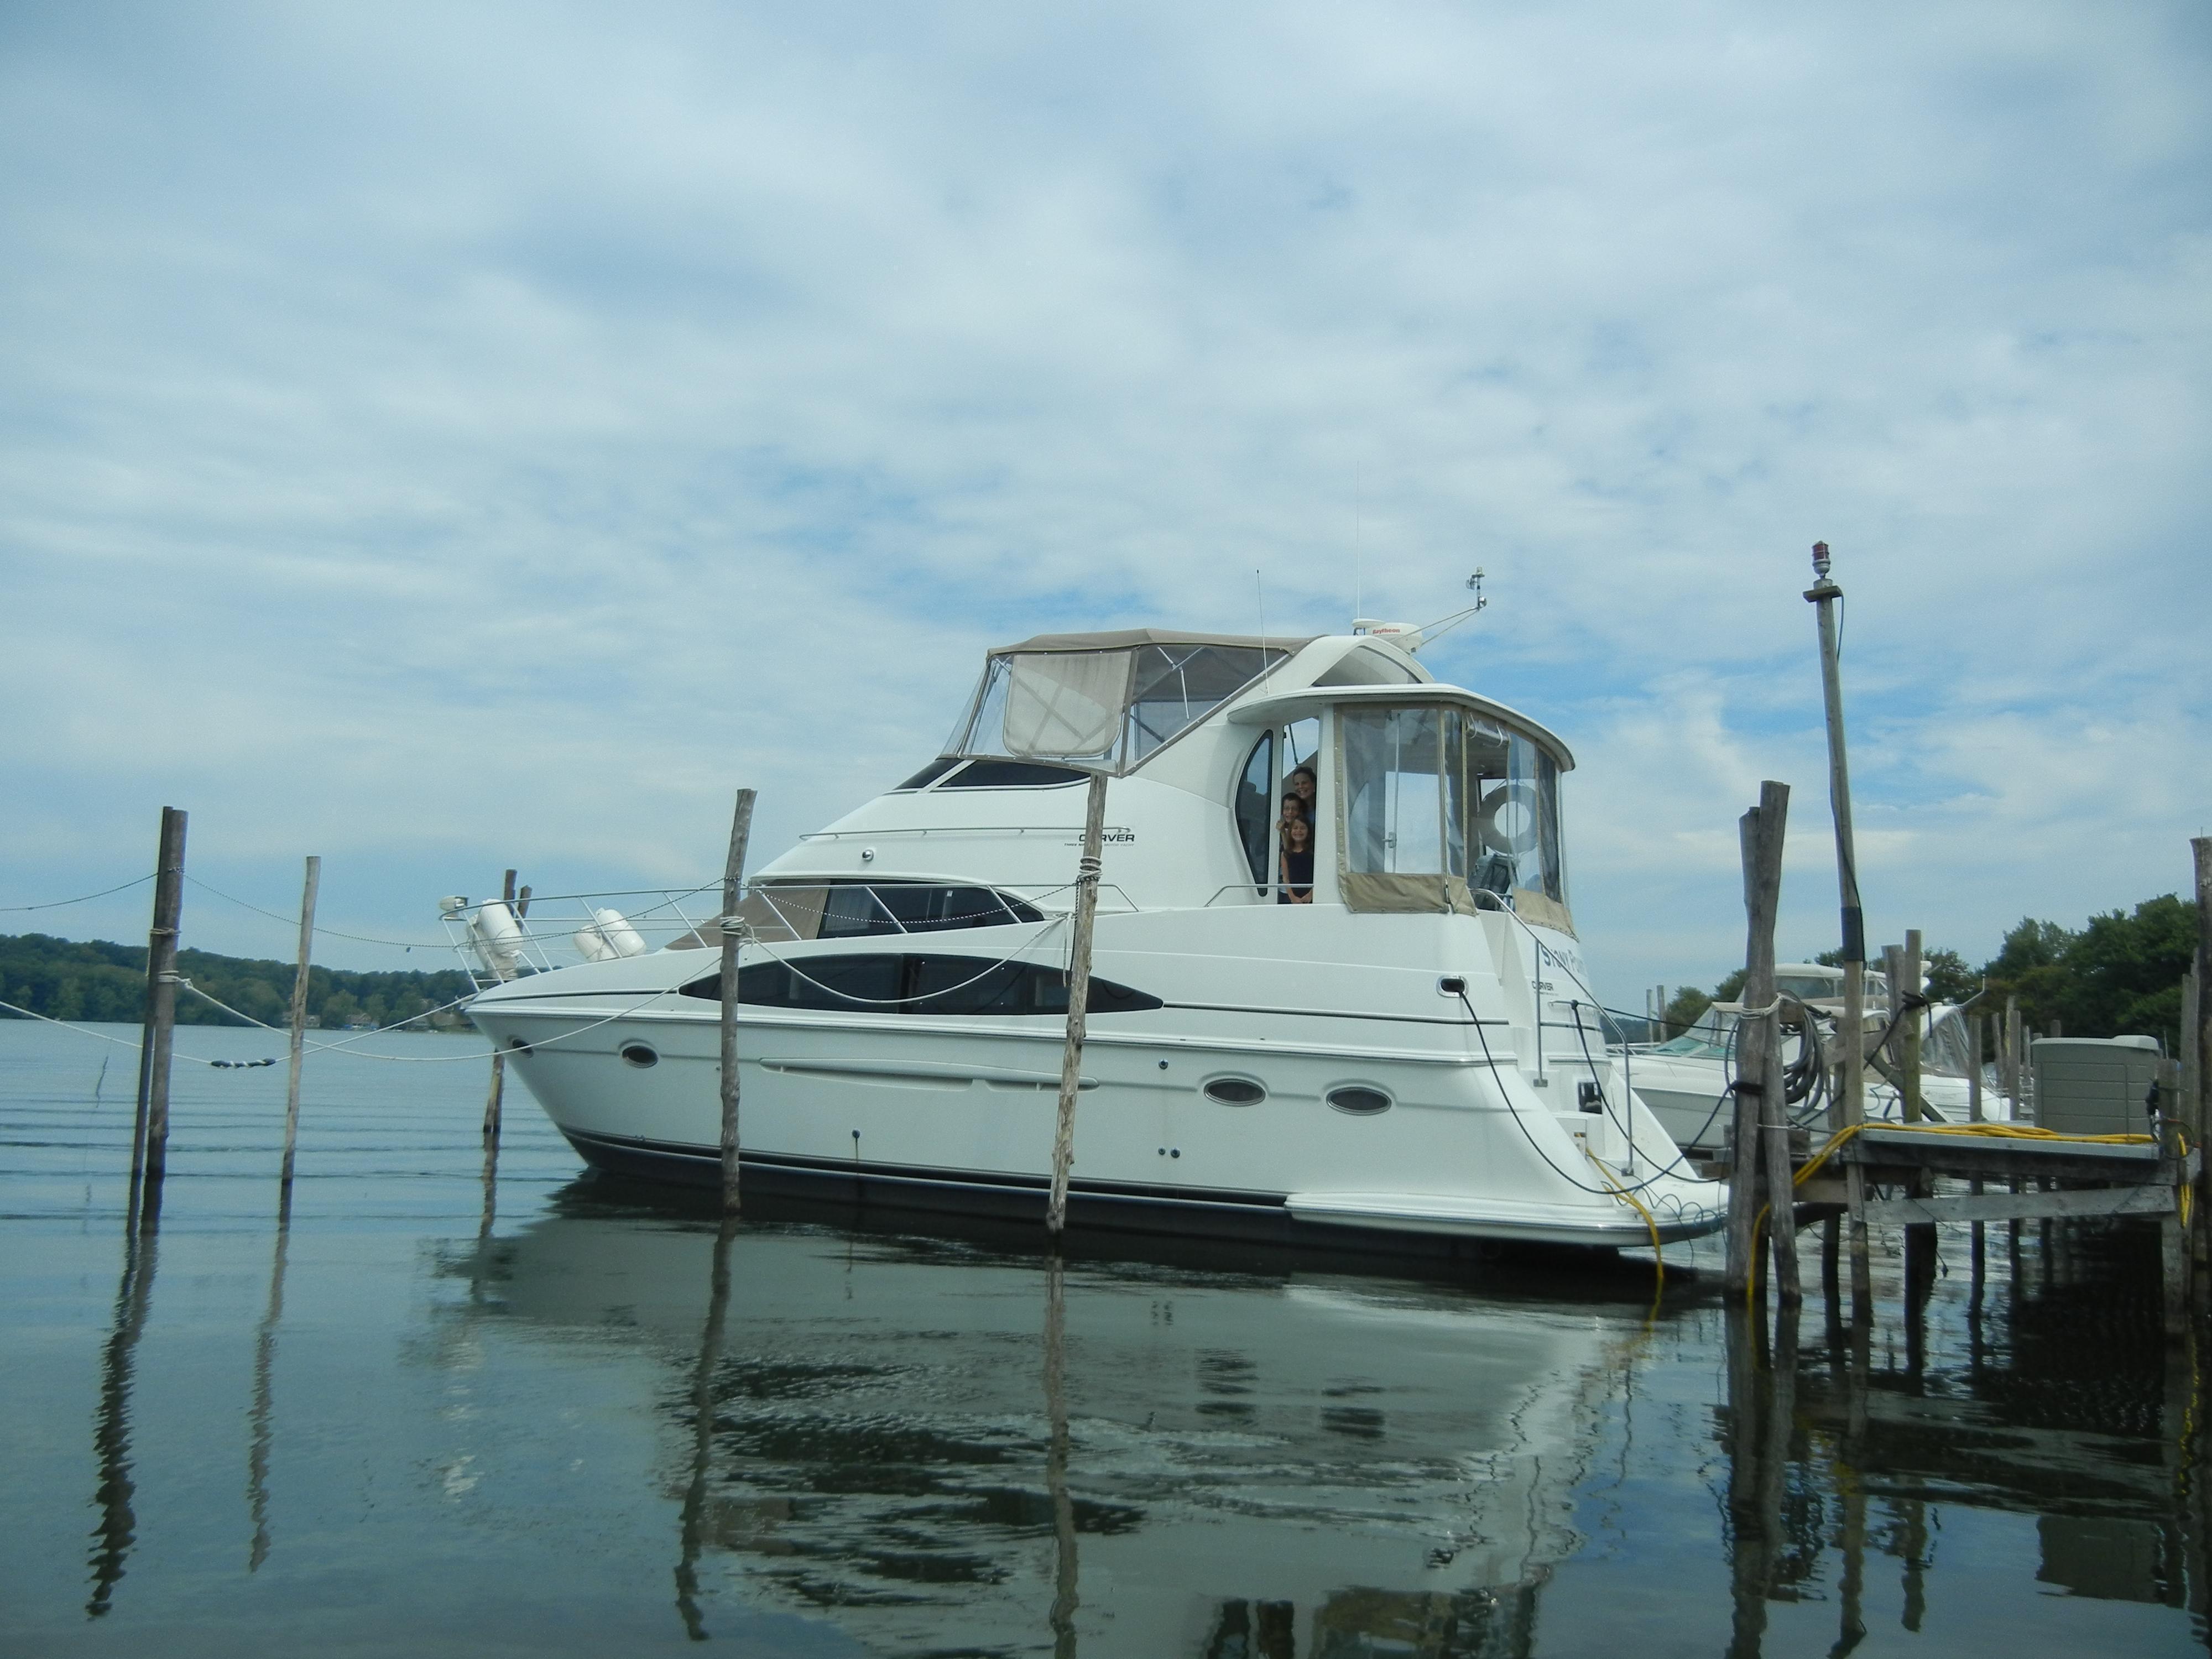 Carver 396 Motor Yacht, Chautauqua Lake-Celoron